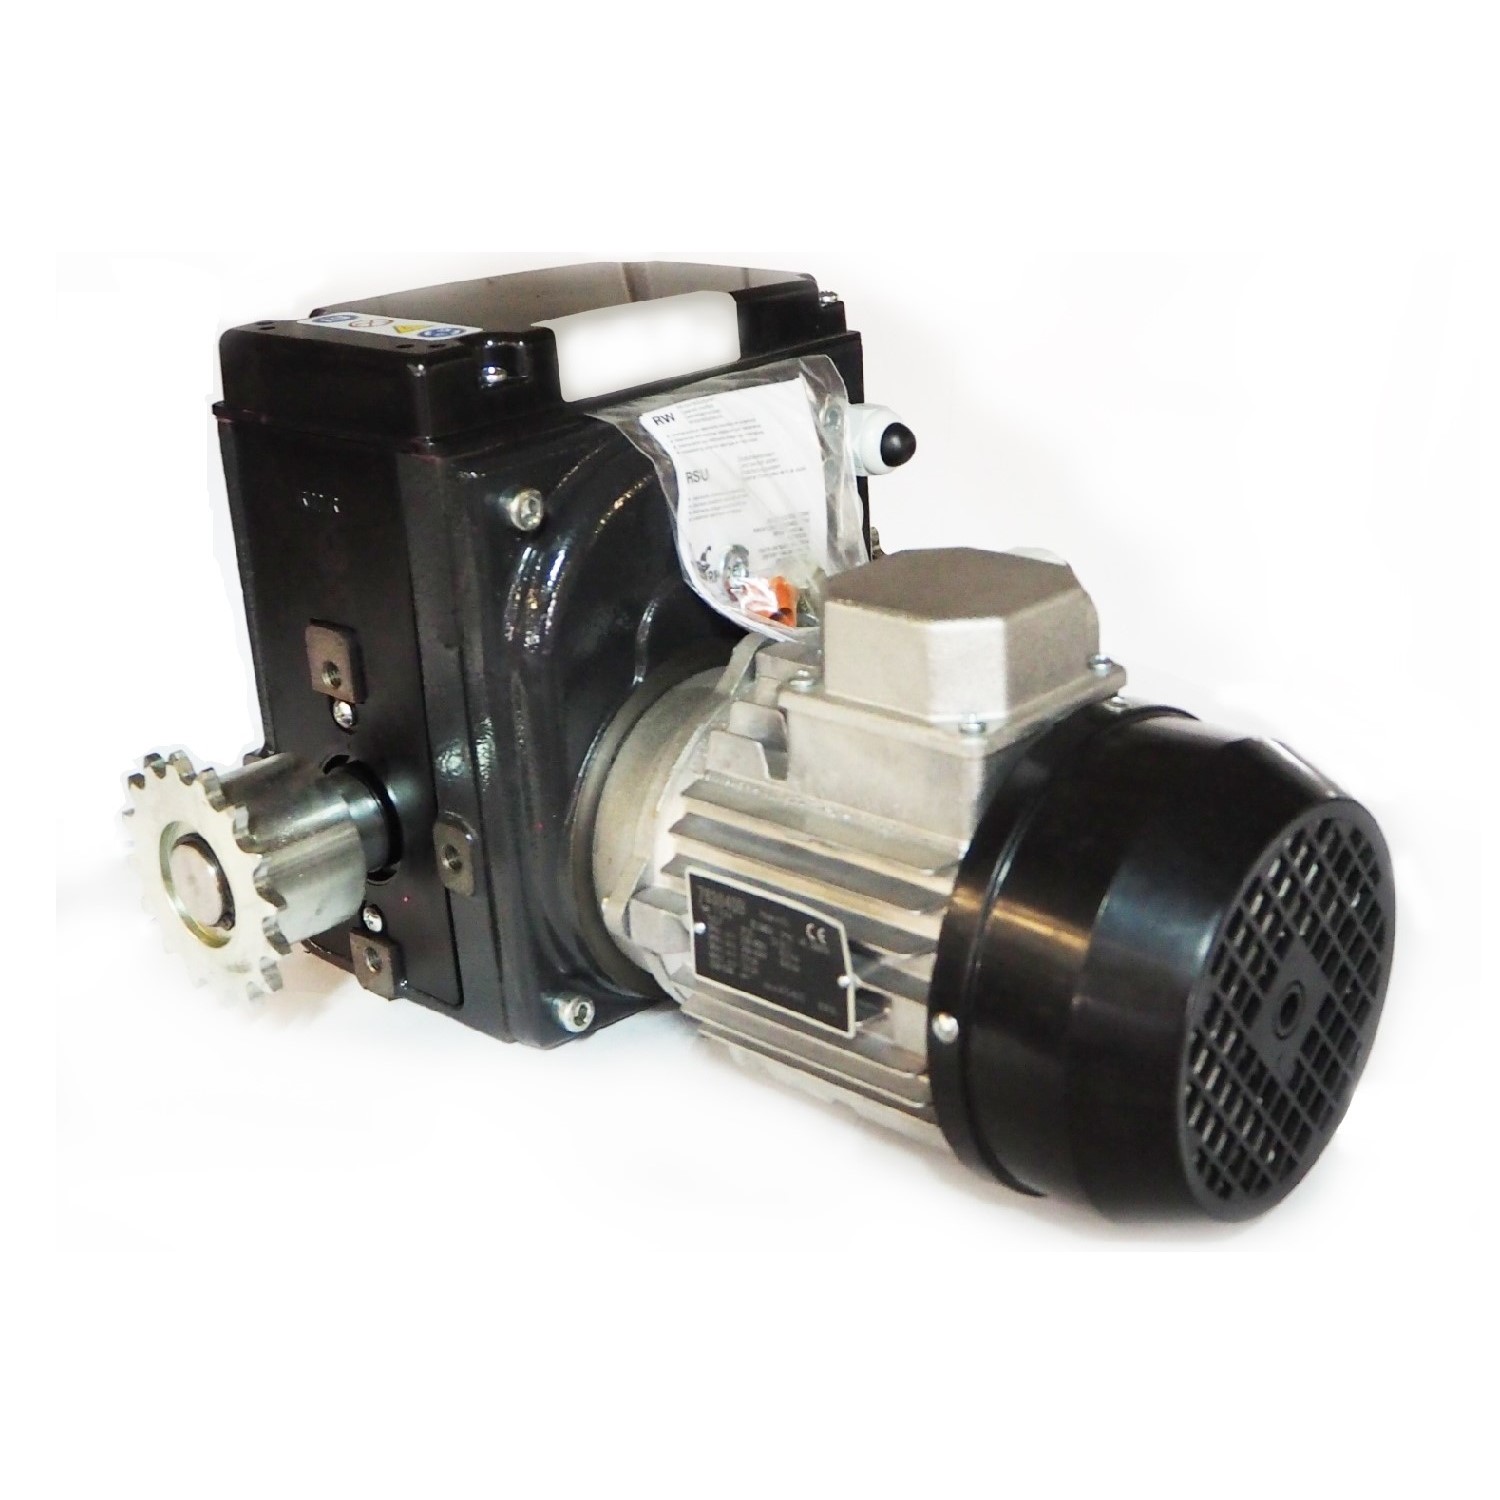 Motor gearbox RW 245 400-460Volt/3-Phase/3 rpm